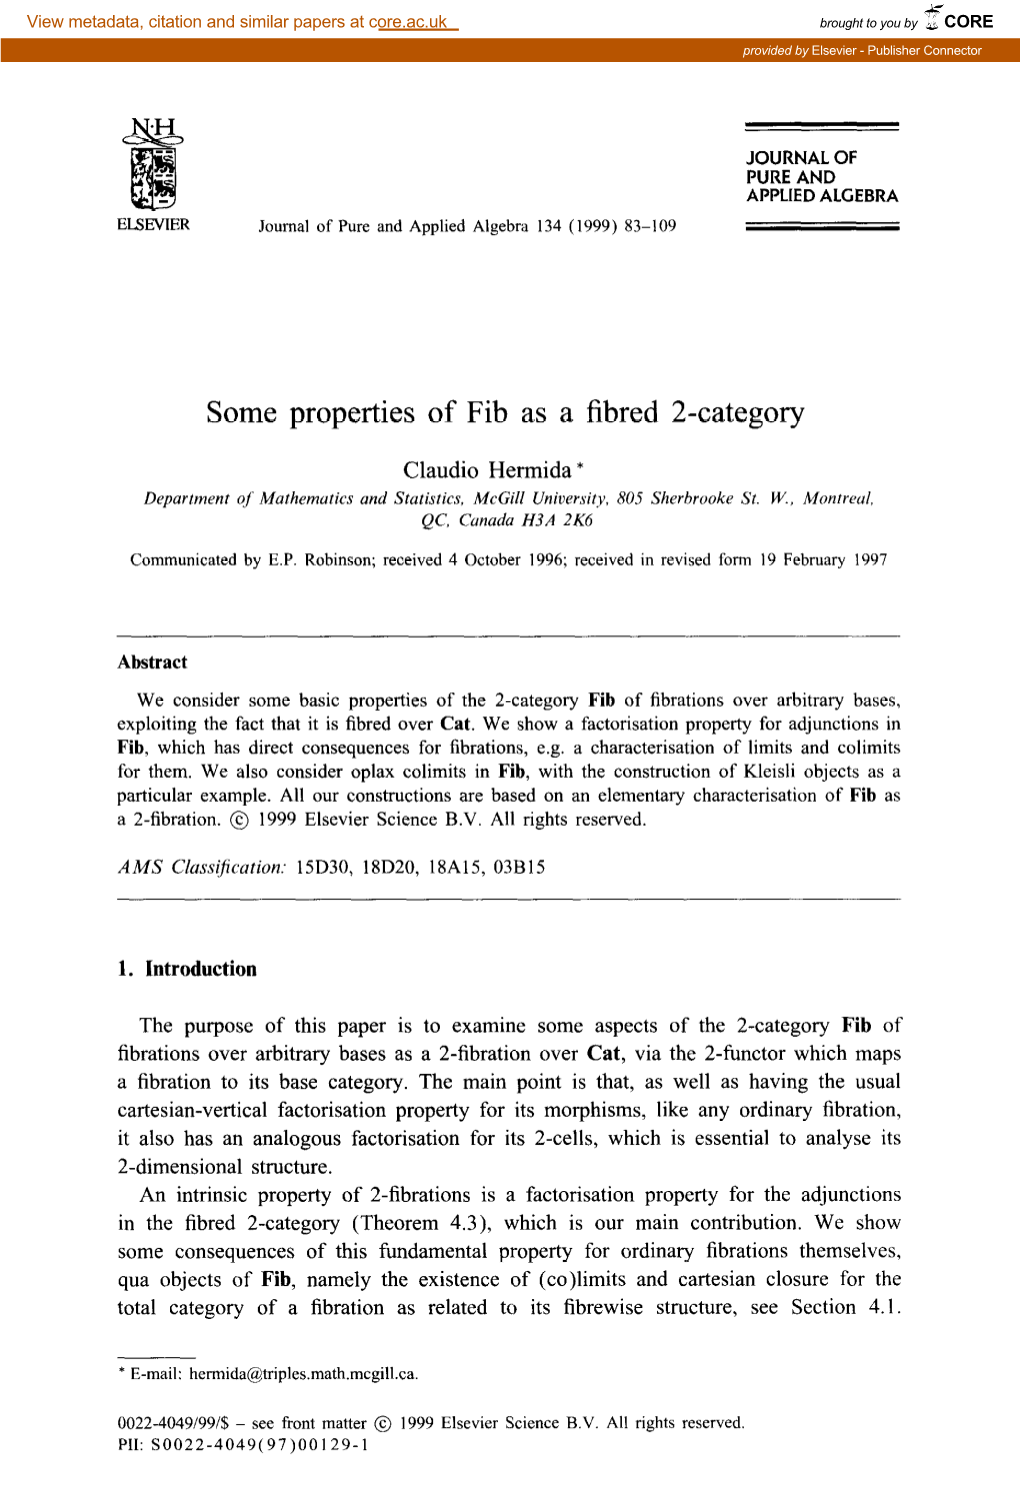 Some Properties of Fib As a Fibred 2-Category